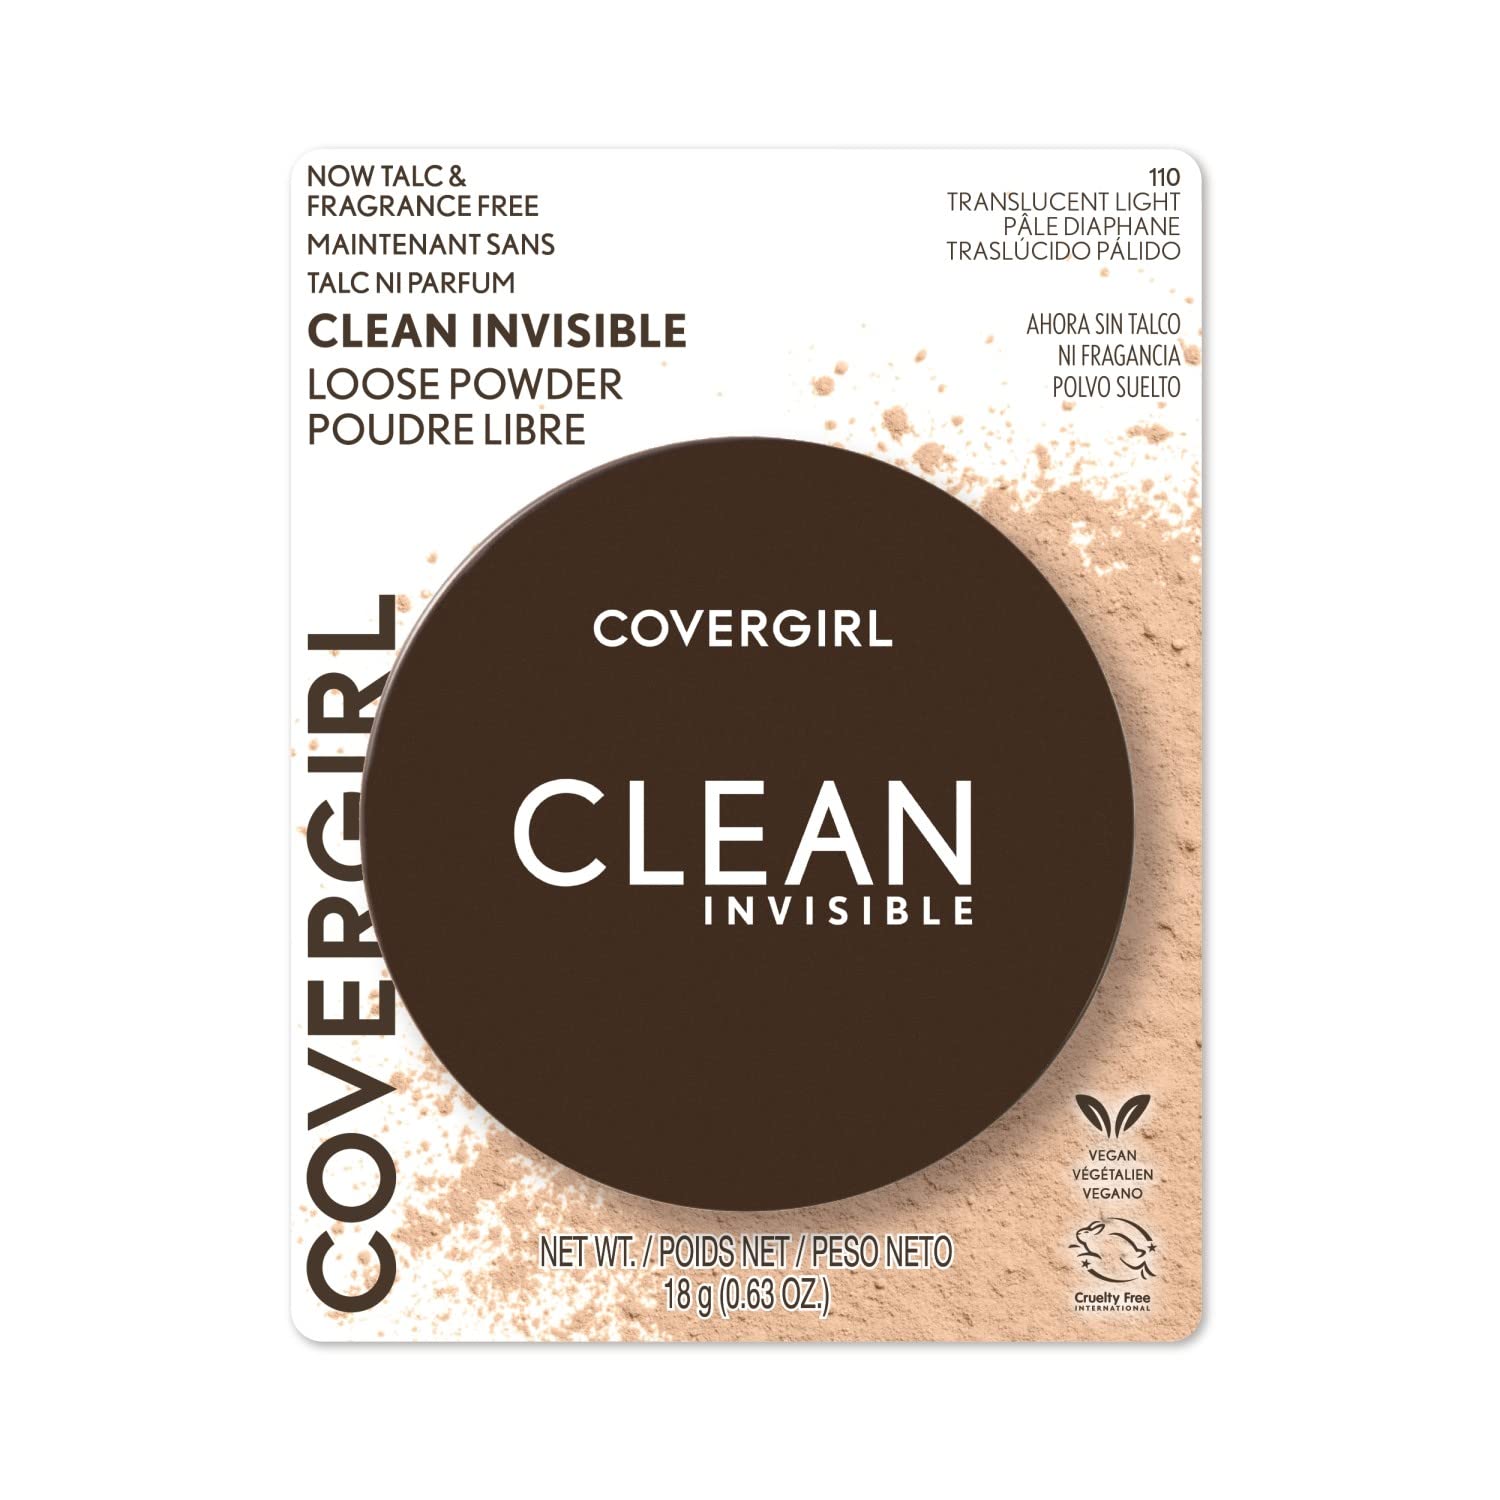 COVERGIRL Clean Invisible Loose Powder - Loose Powder, Setting Powder, Vegan Formula - Translucent Light, 20g (0.7 oz)